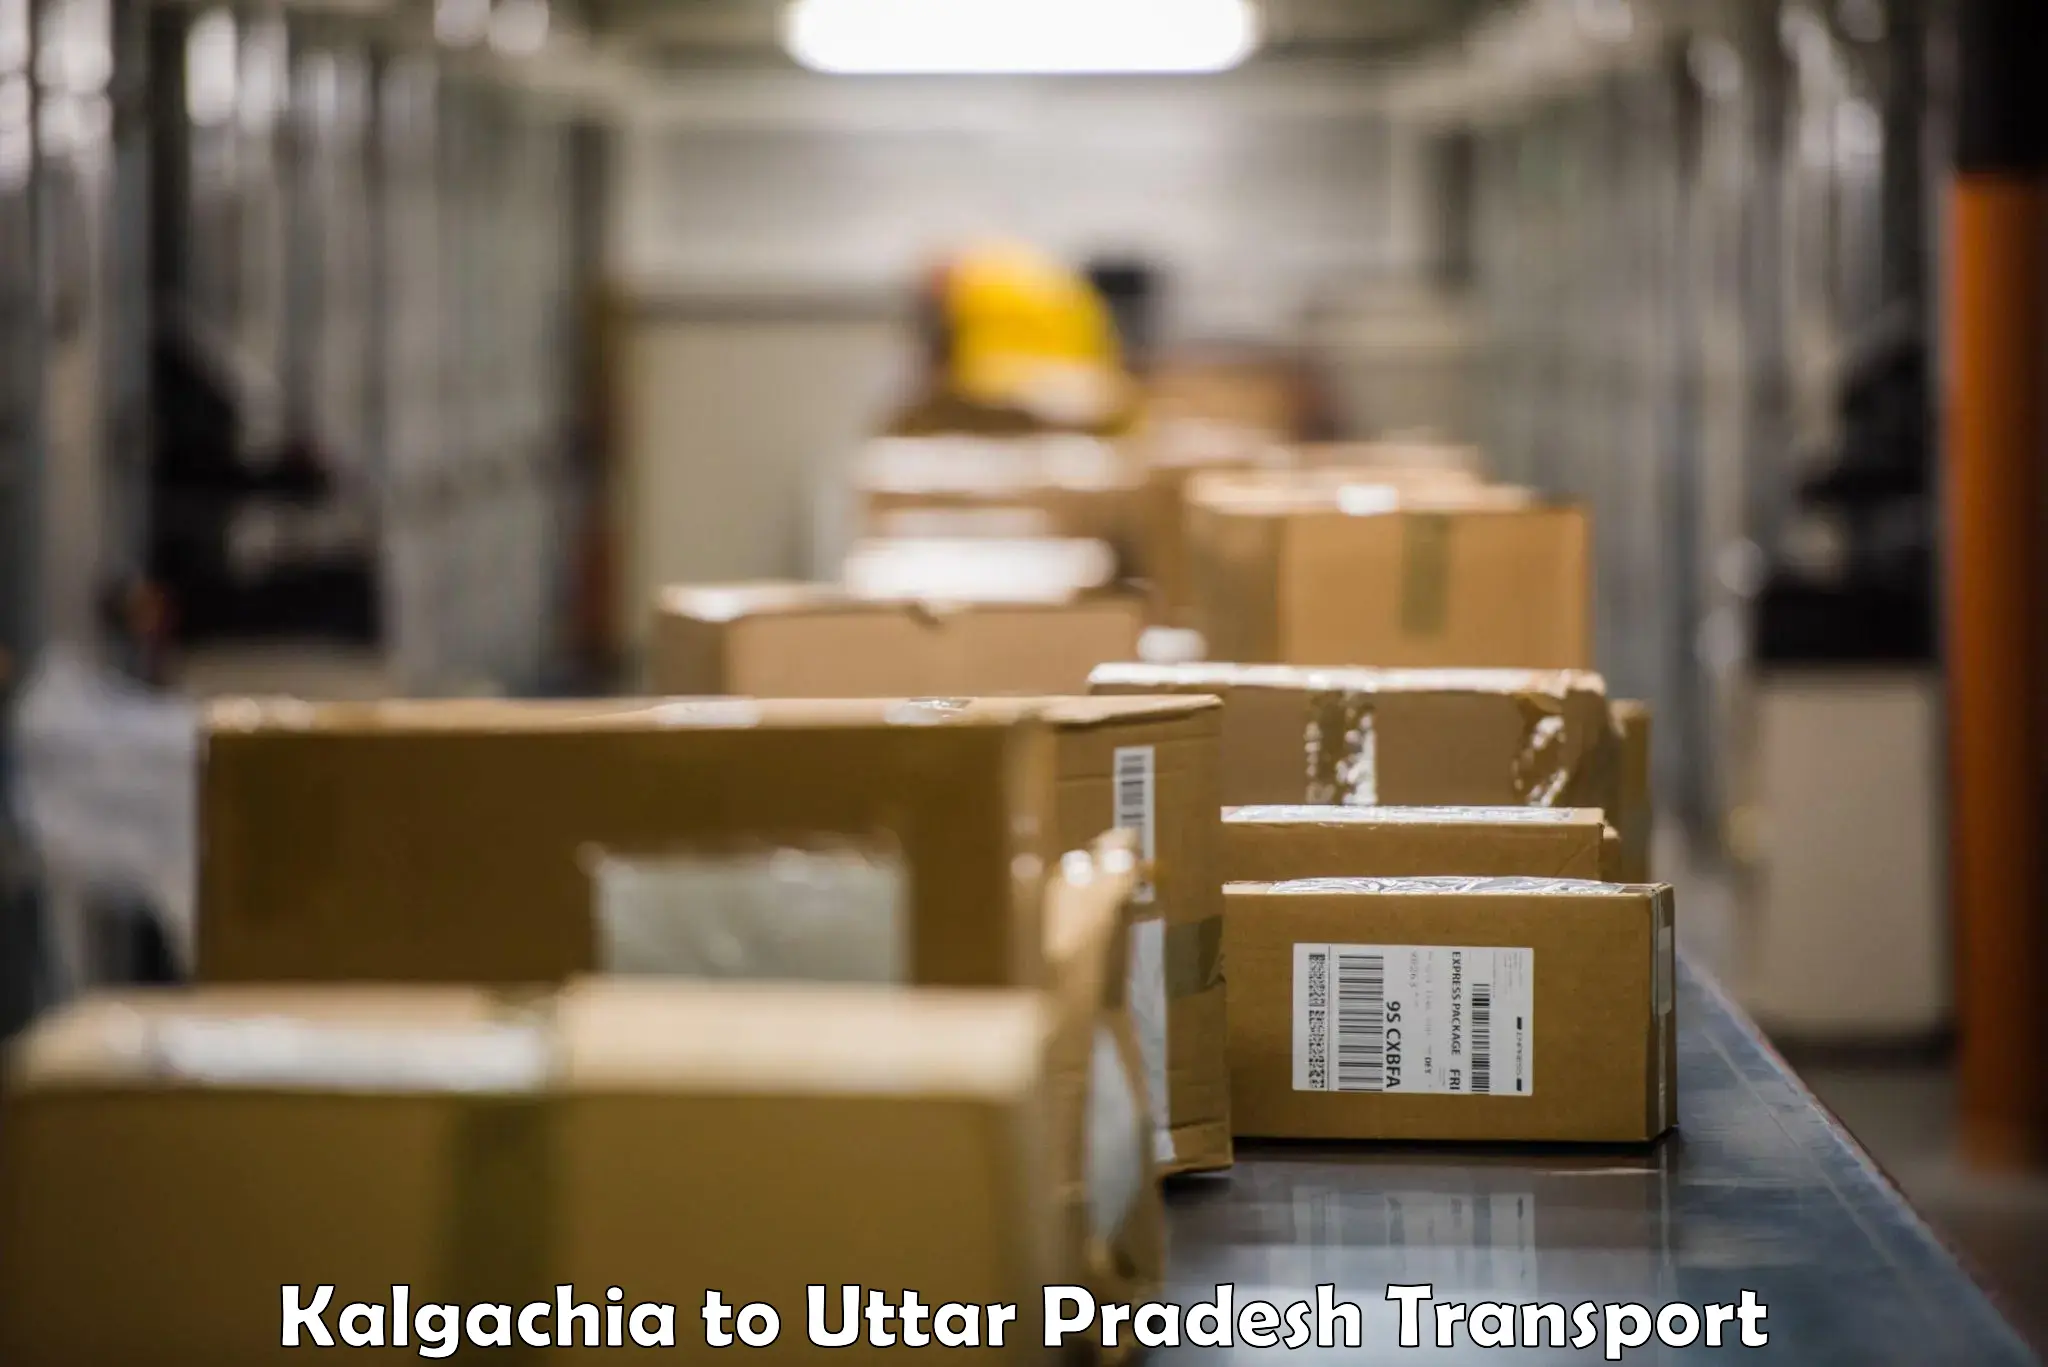 Truck transport companies in India Kalgachia to Varanasi